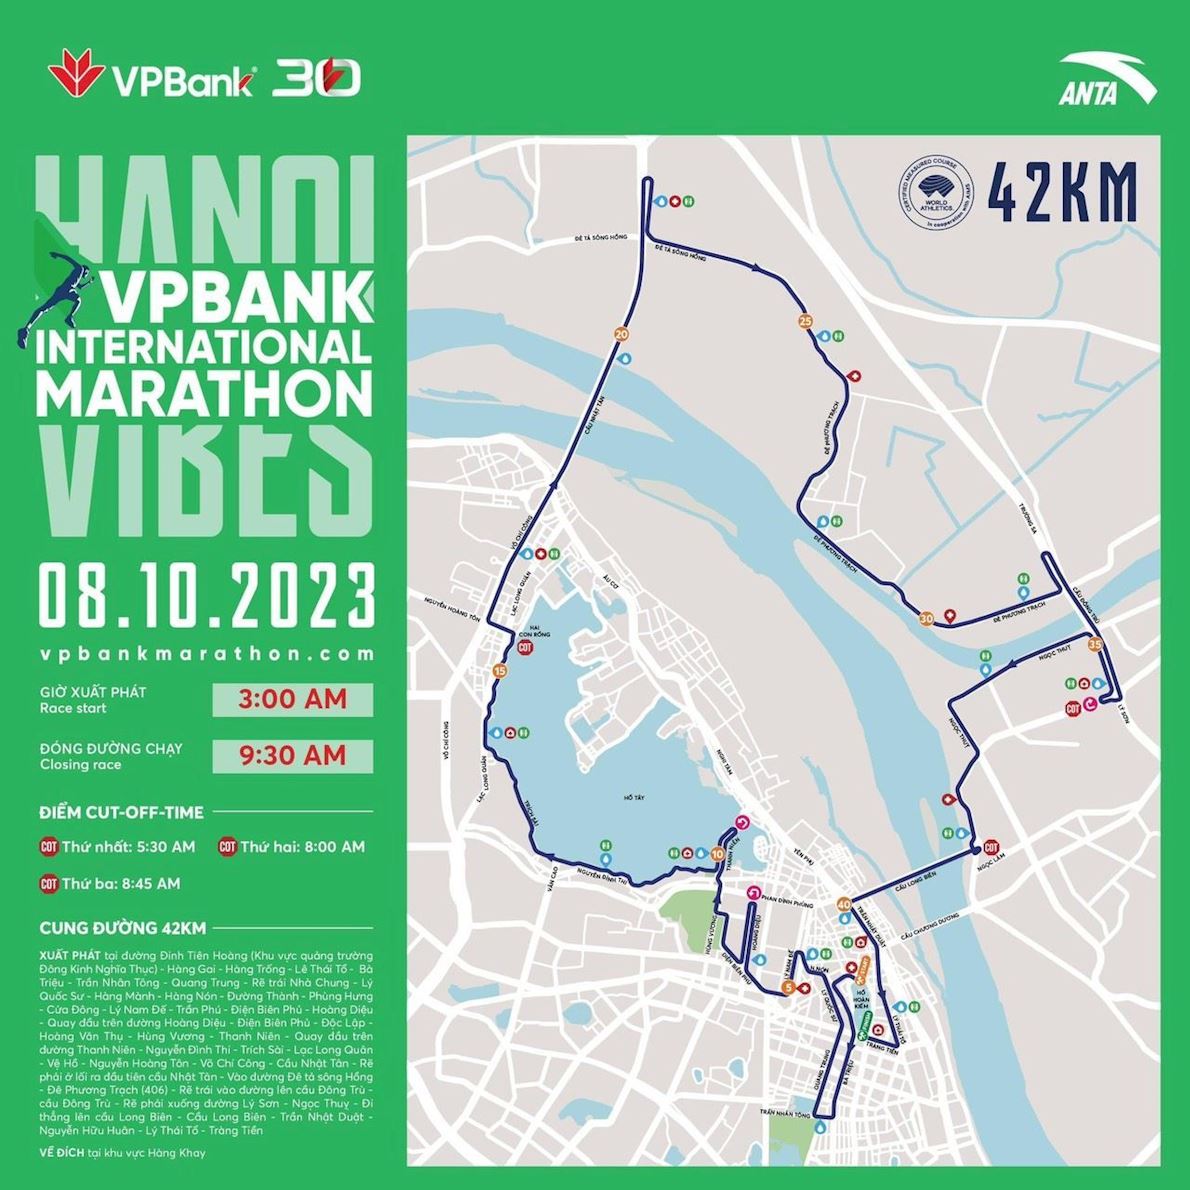 VPBank Hanoi International Marathon Mappa del percorso